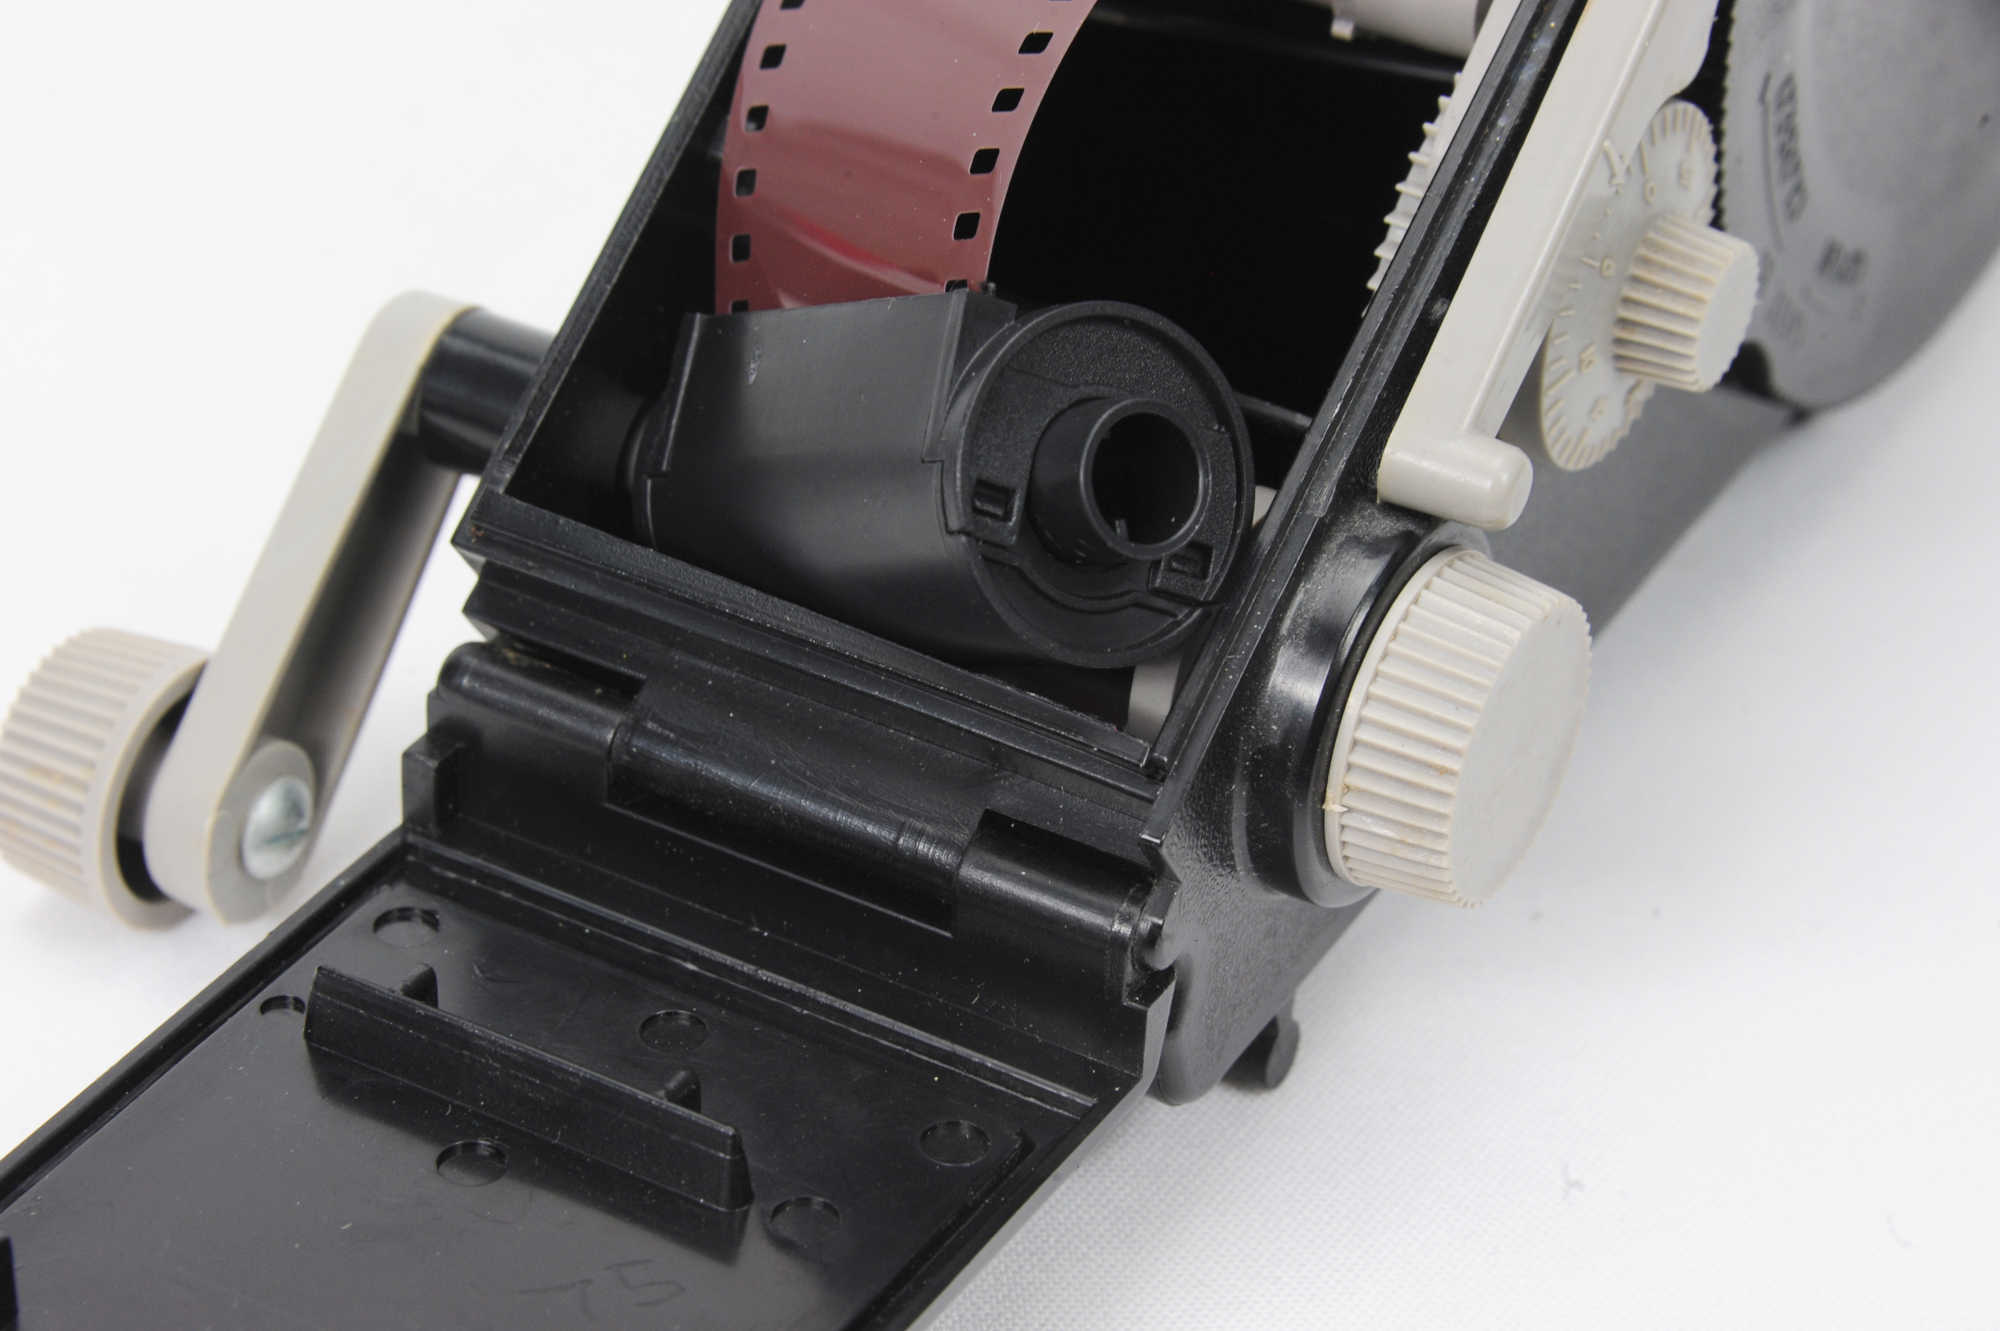 Assembled cassette with Watson film loader